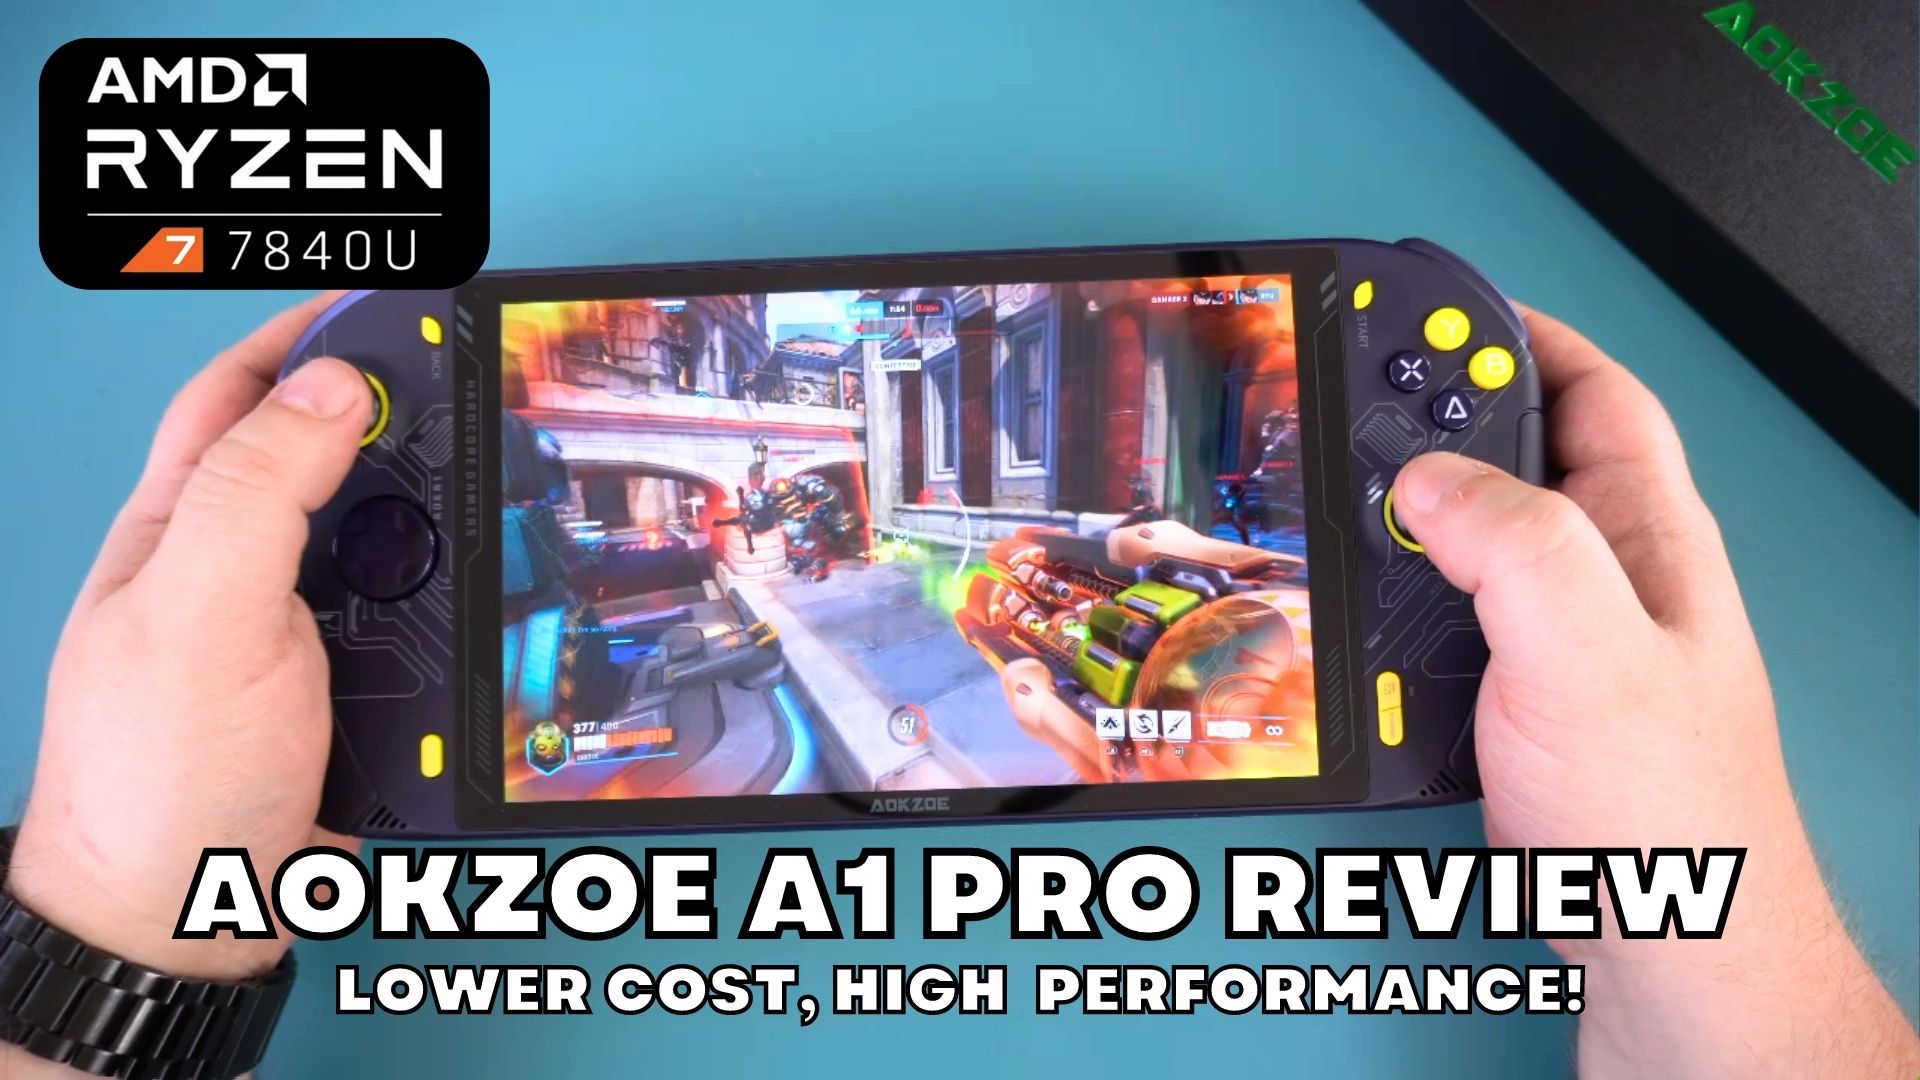 AOKZOE A1 PRO Review - Lower cost high performance AMD Ryzen 7 7840U  handheld